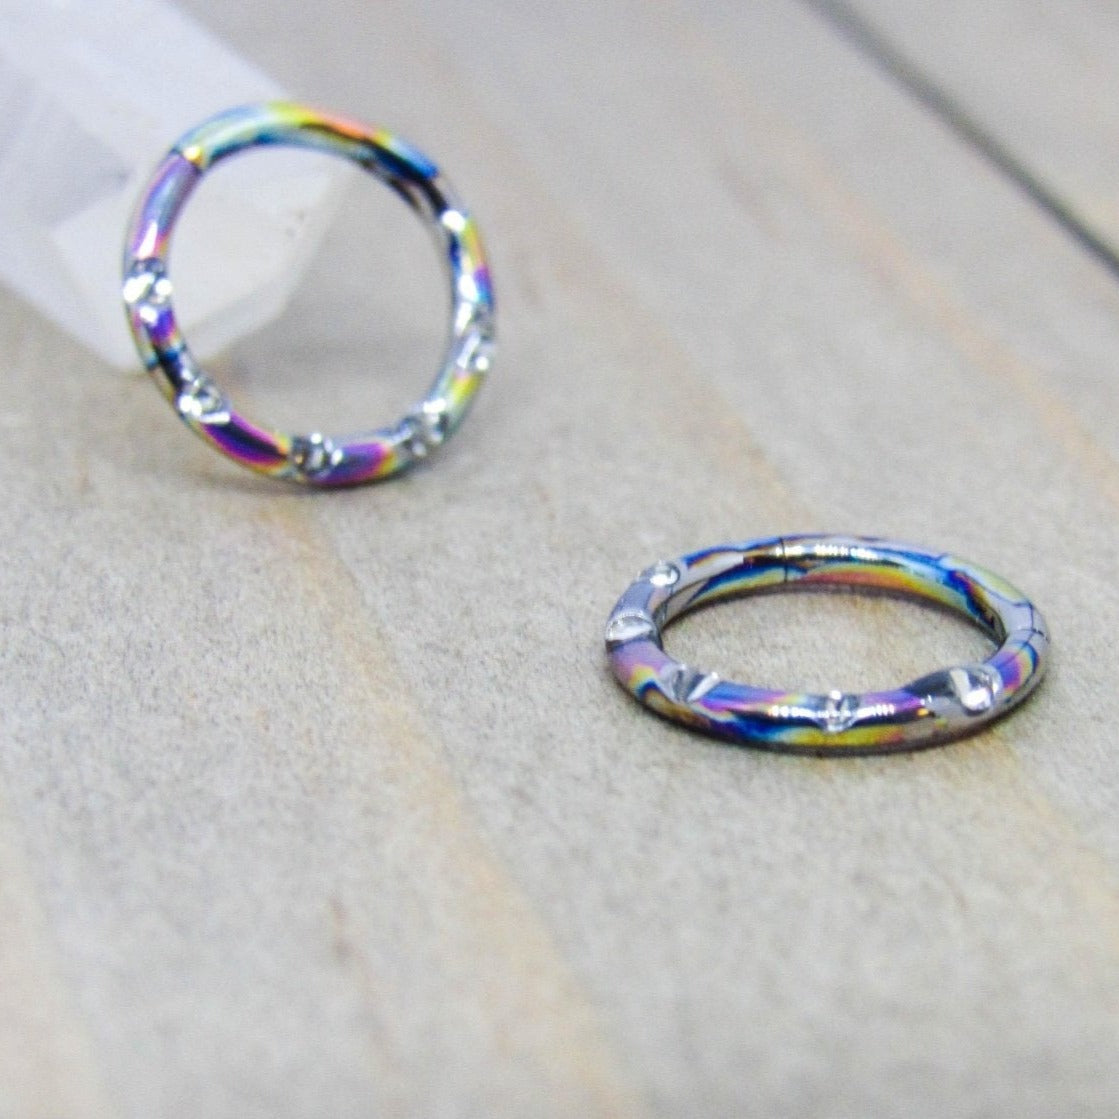 16g titanium hinged segment ring gemmed 5 crystal clear gems septum ring oilslick anodized